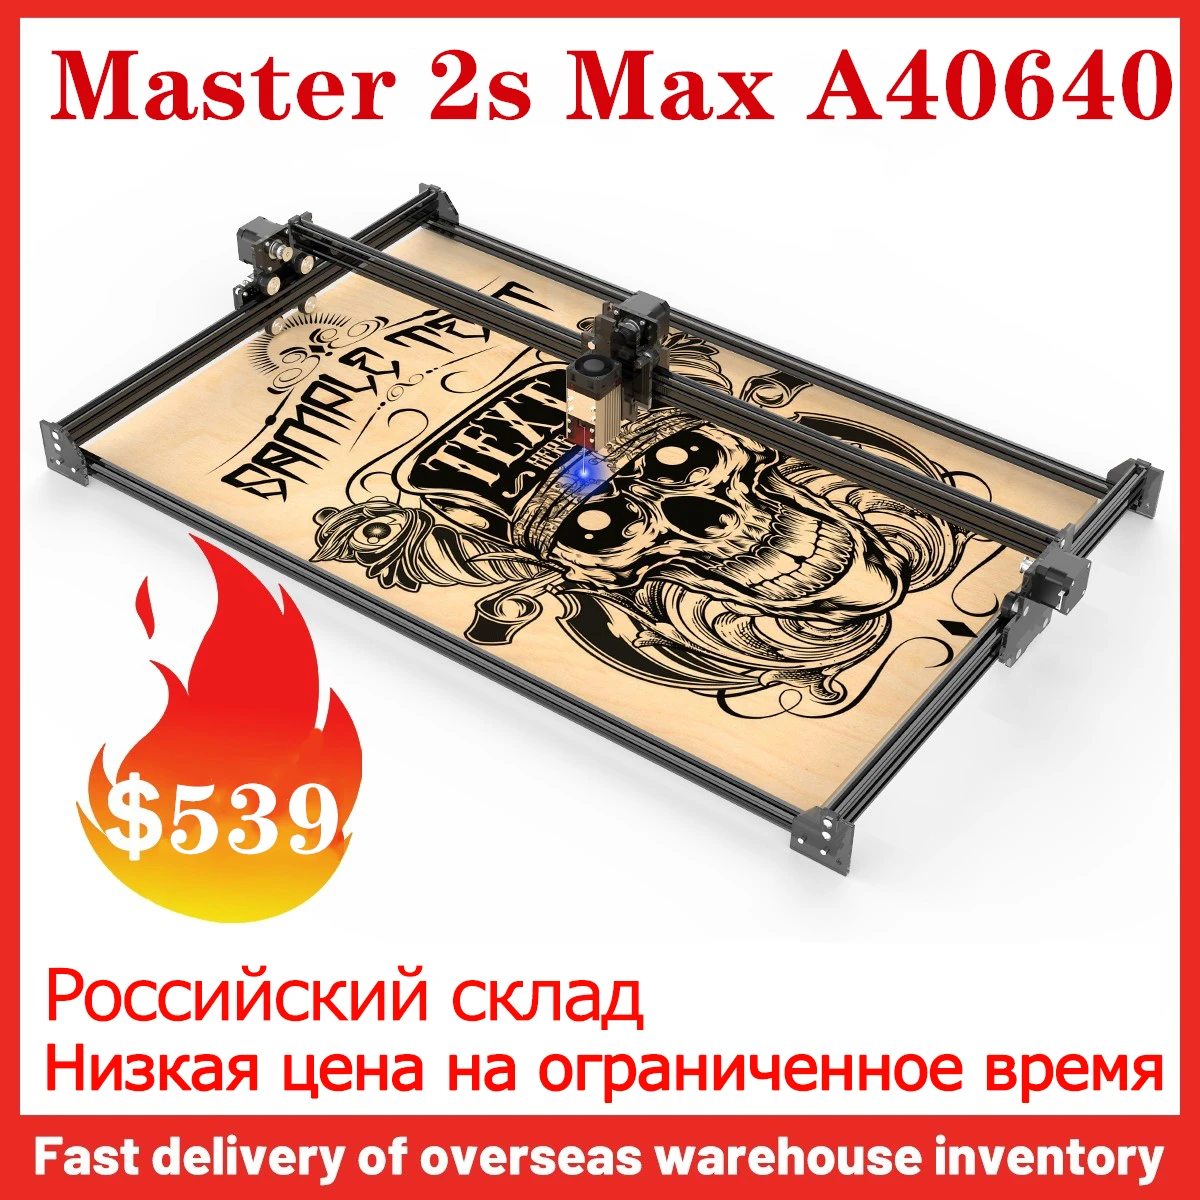 

NEJE Master 2S Max 460 X 810 MM CNC Desktop Mini Wireless Laser Engraver, Cutter, Wood Router, Engraving, Cutting Machine